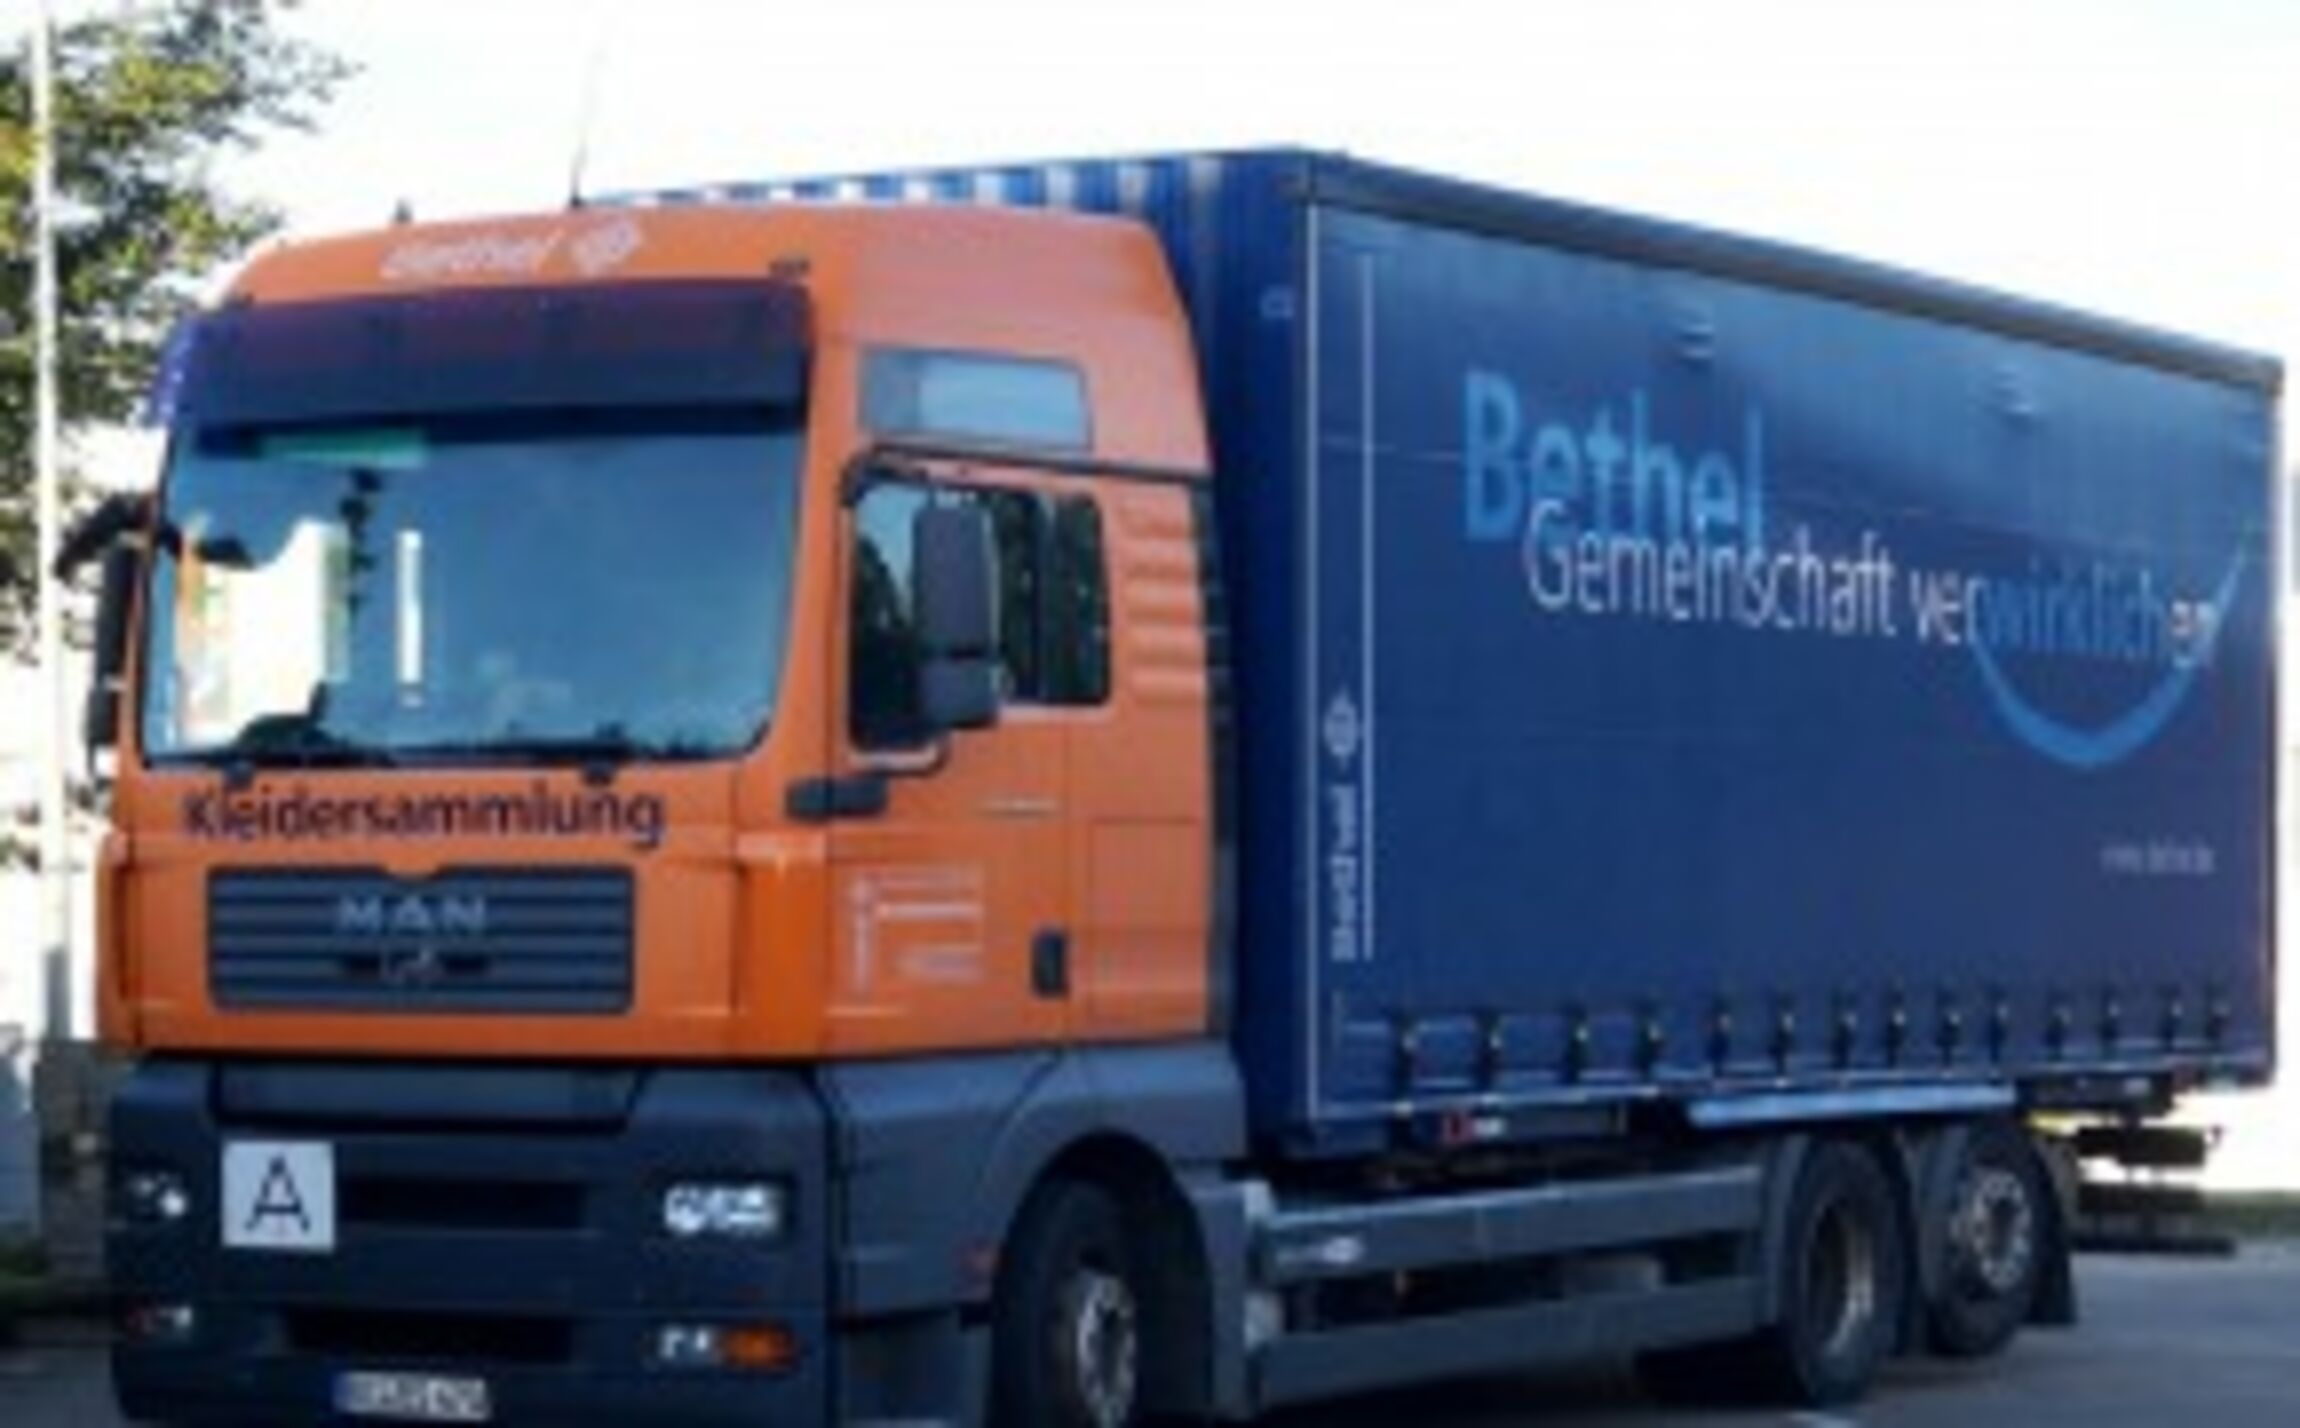 Lastwagen der Brockensammlung Bethel